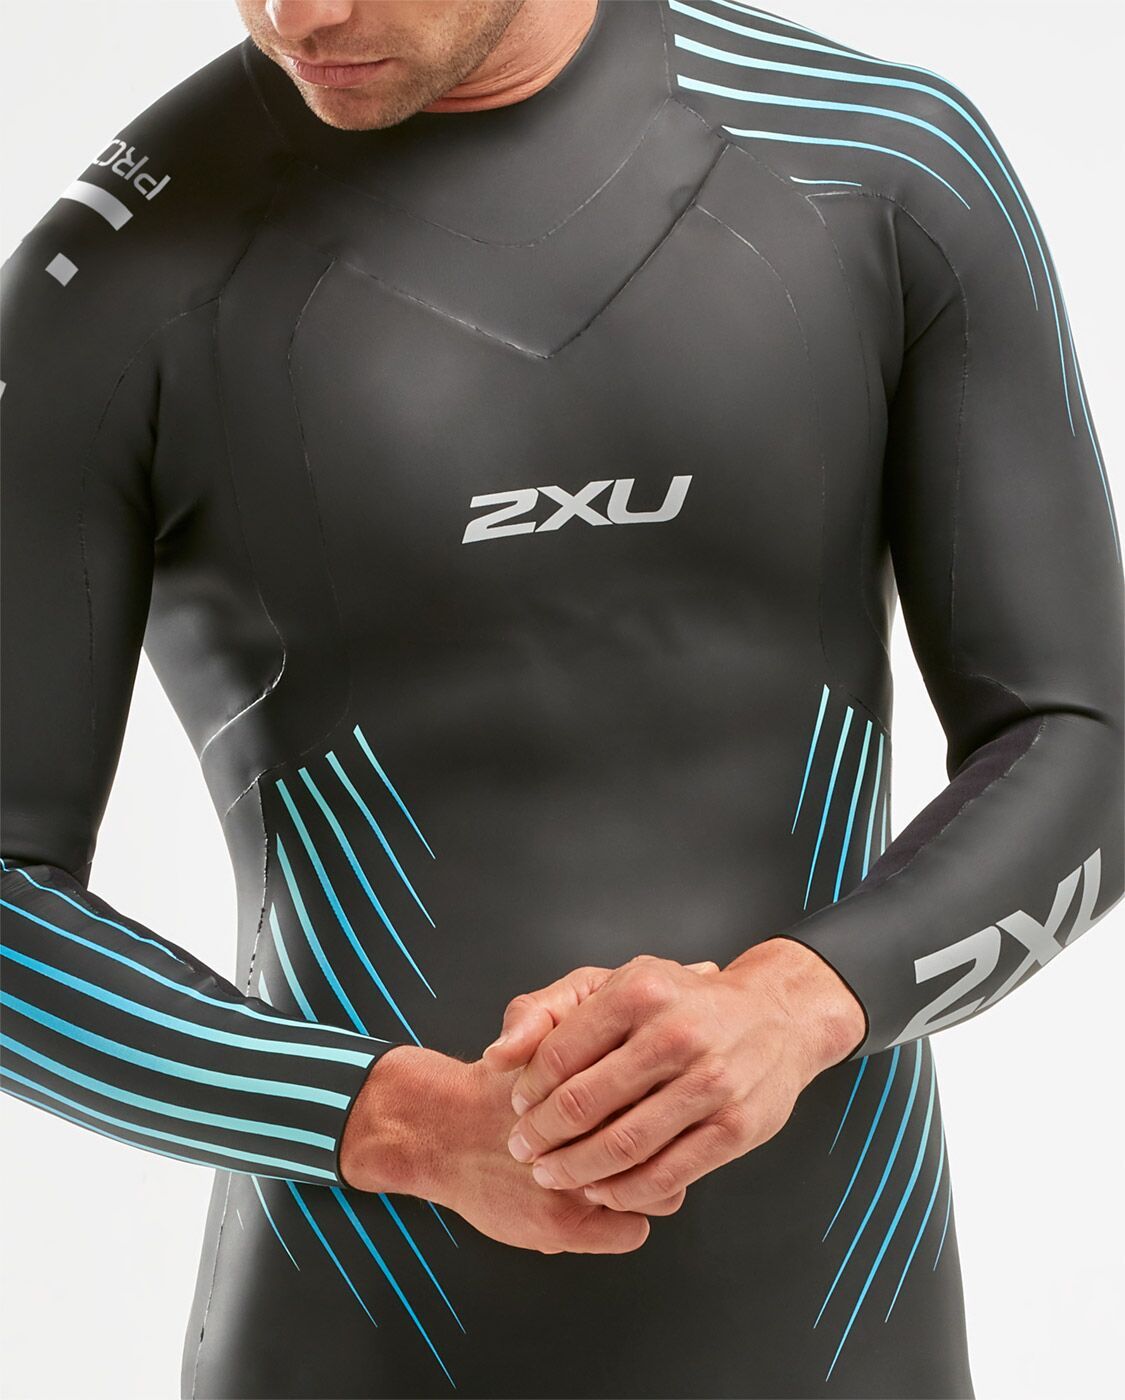 2XU South Africa - Men's Propel:1 Wetsuit - Black/Blue Ombre